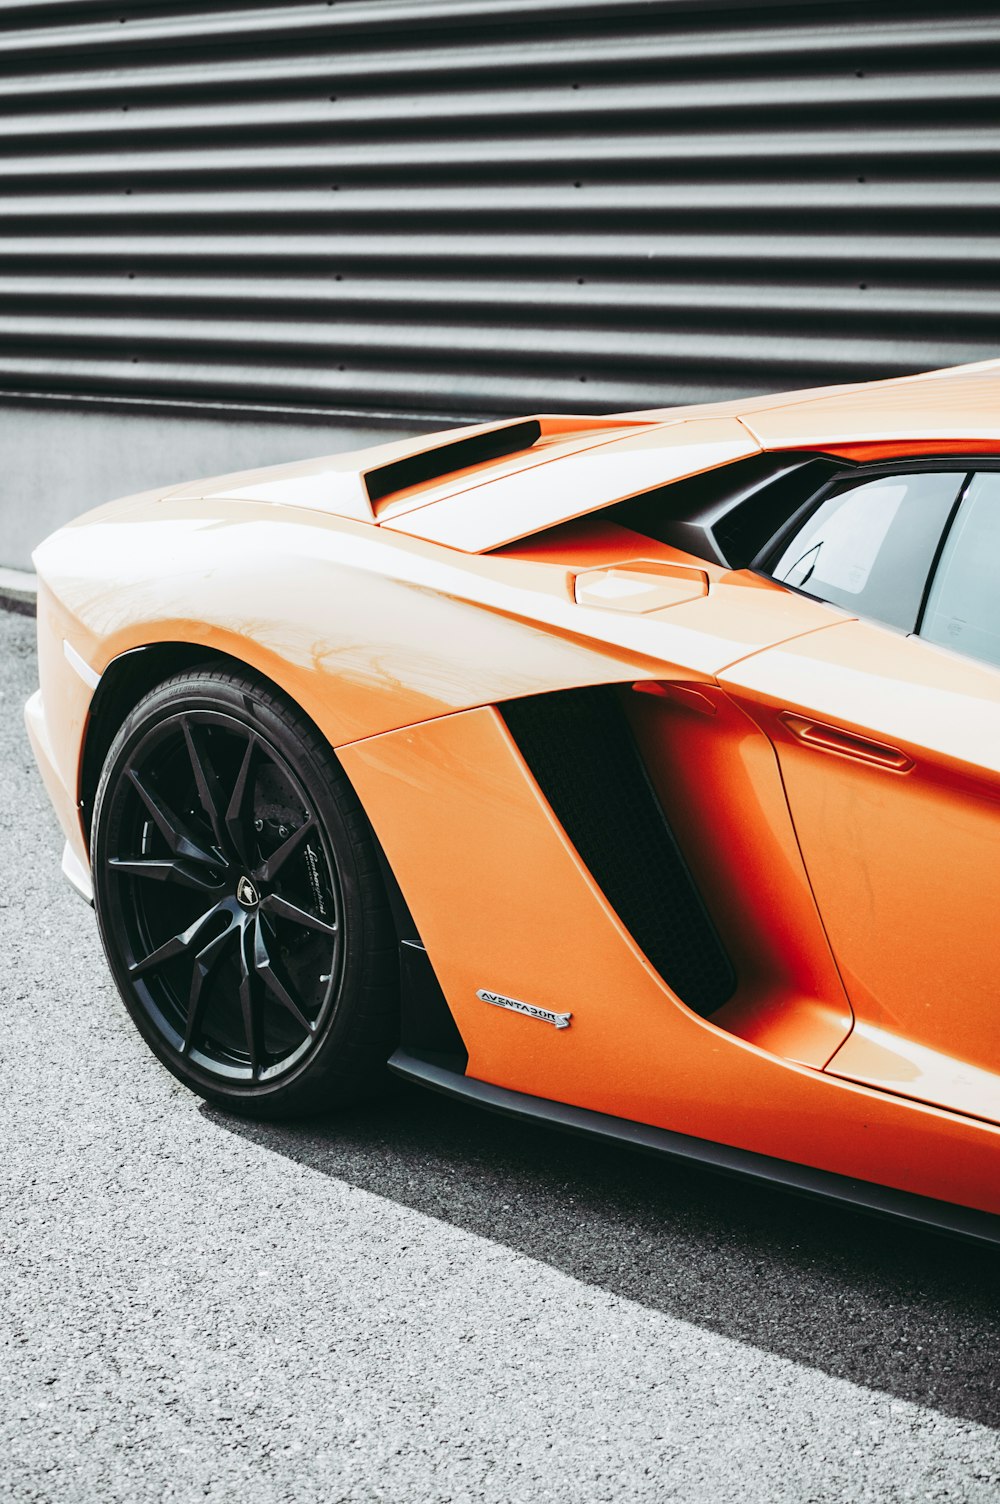 Fotografia de foco do carro esportivo laranja estacionado